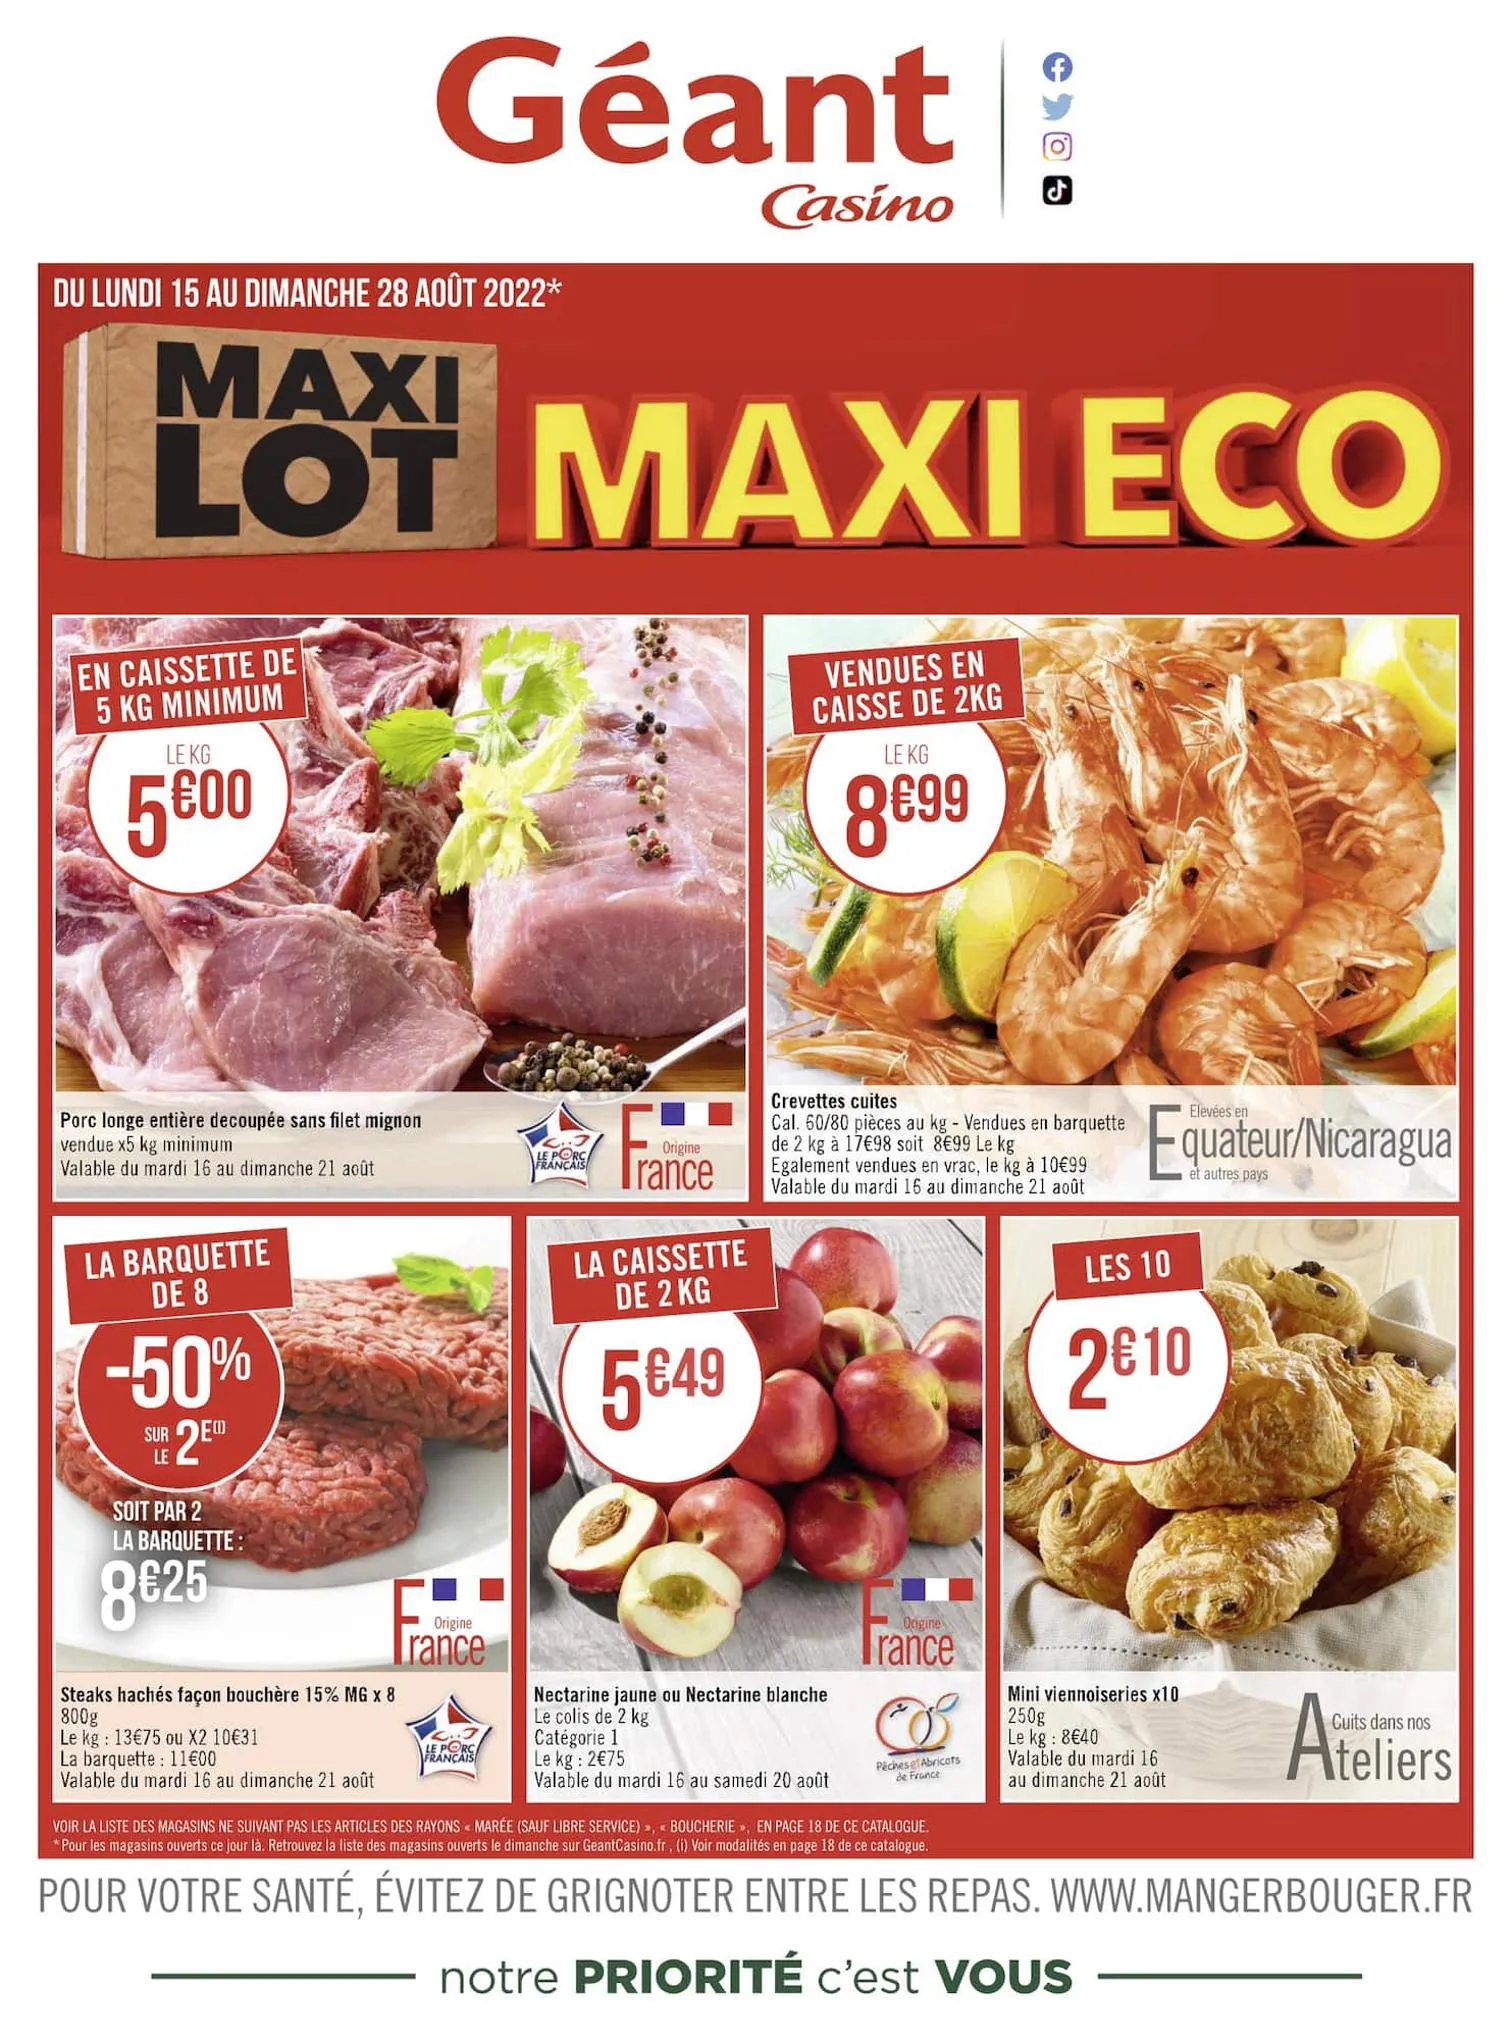 Catalogue Maxi lot, maxi eco, page 00023